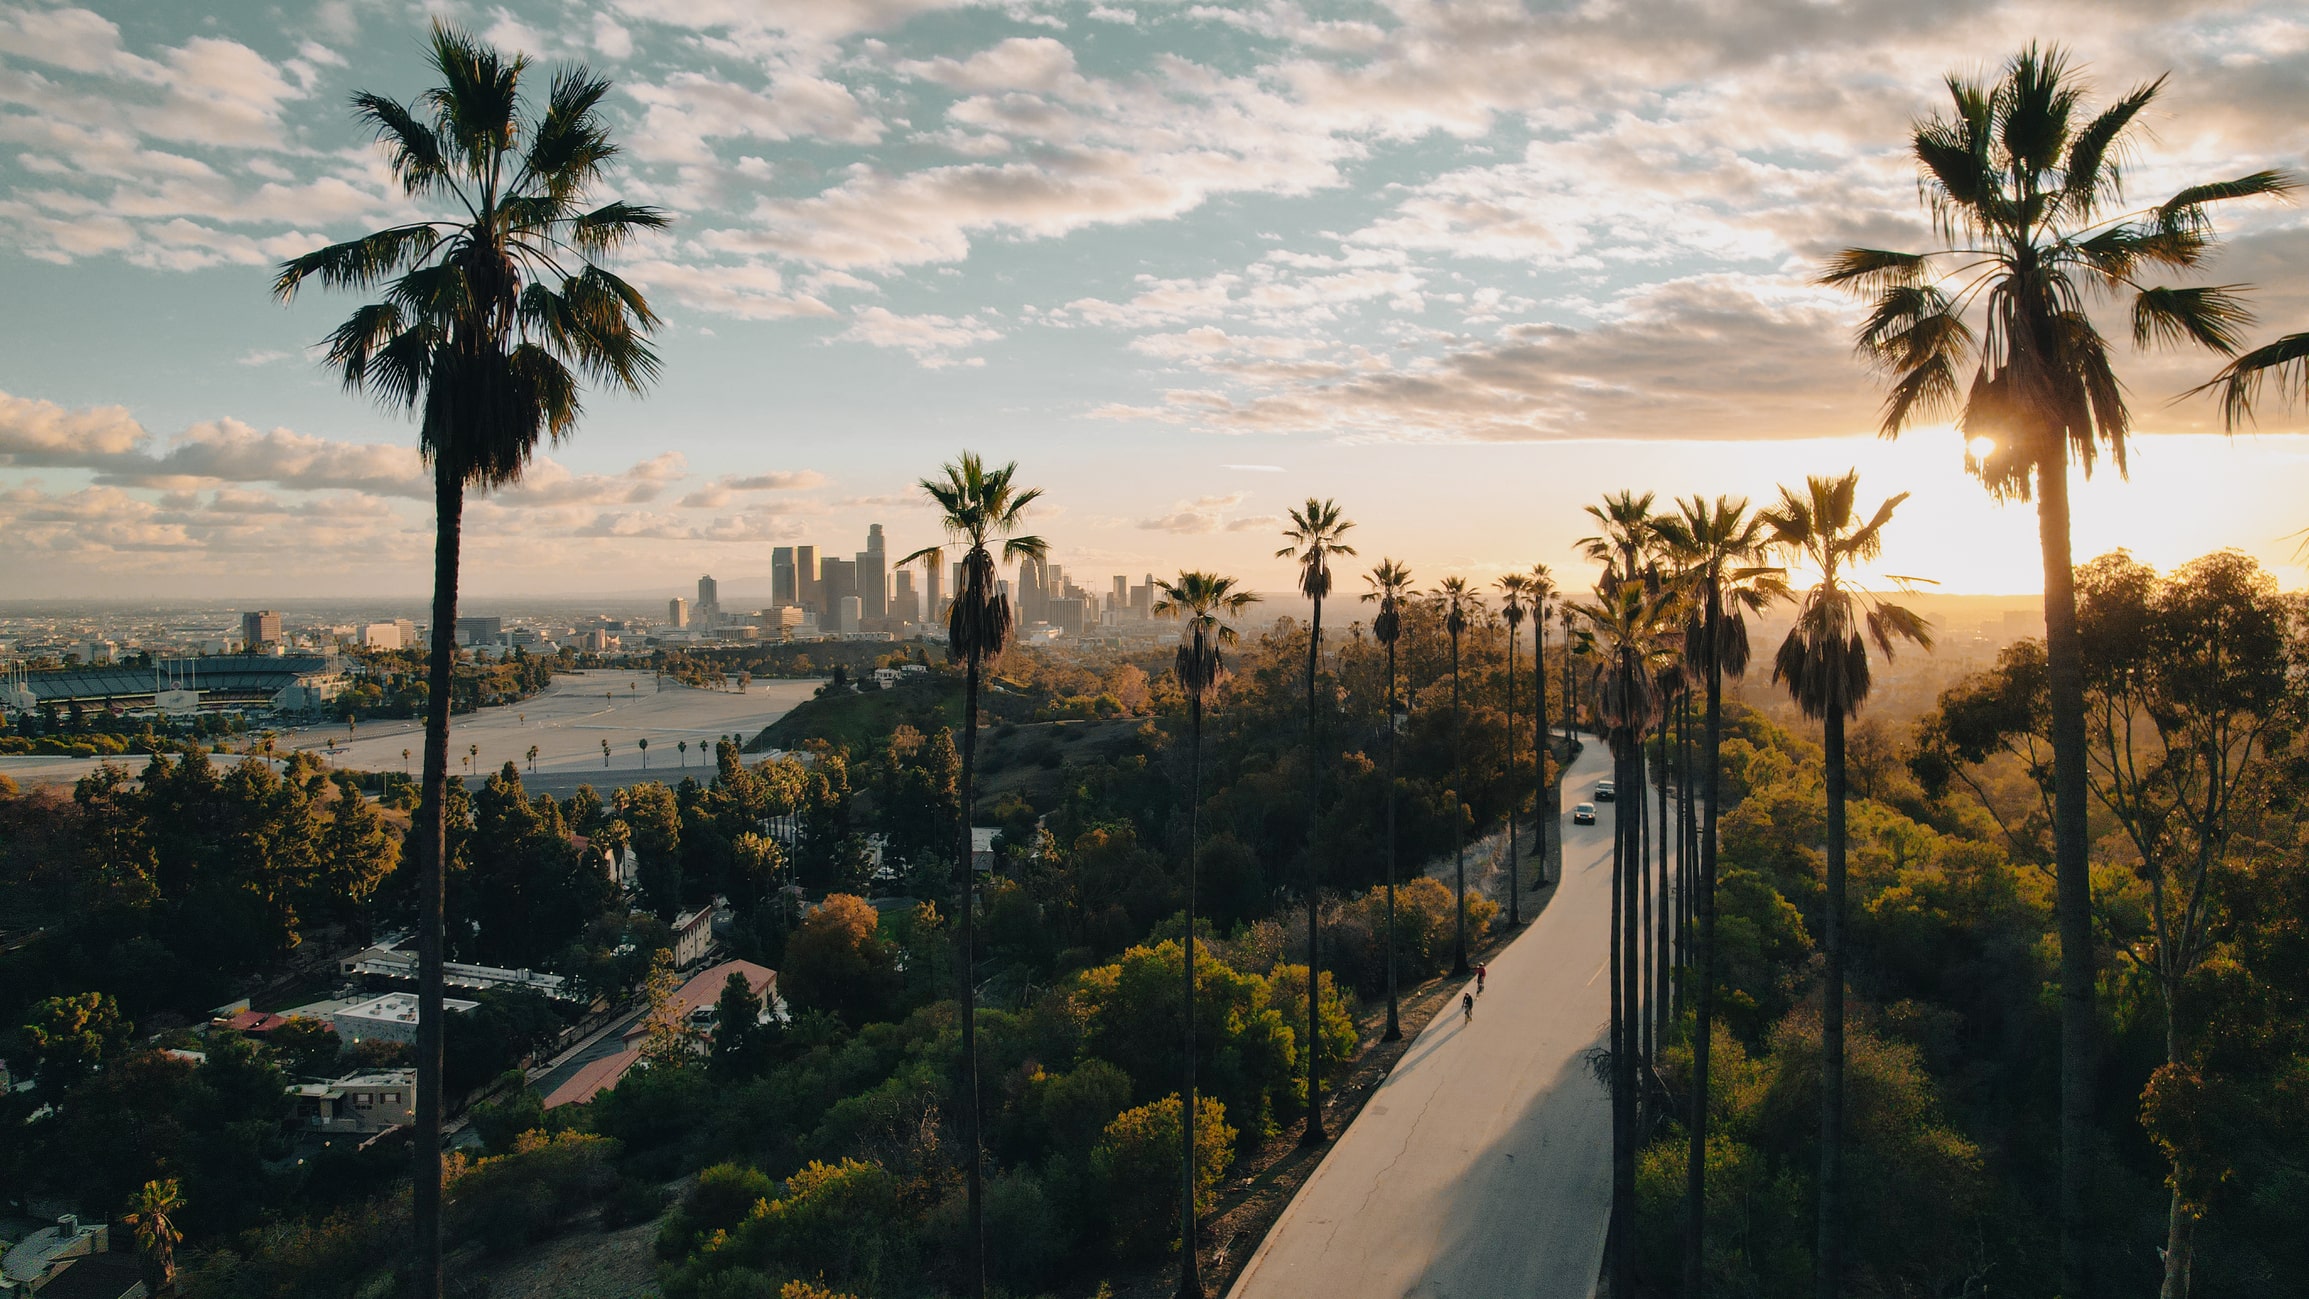 Bird's eye view of Los Angeles, California.